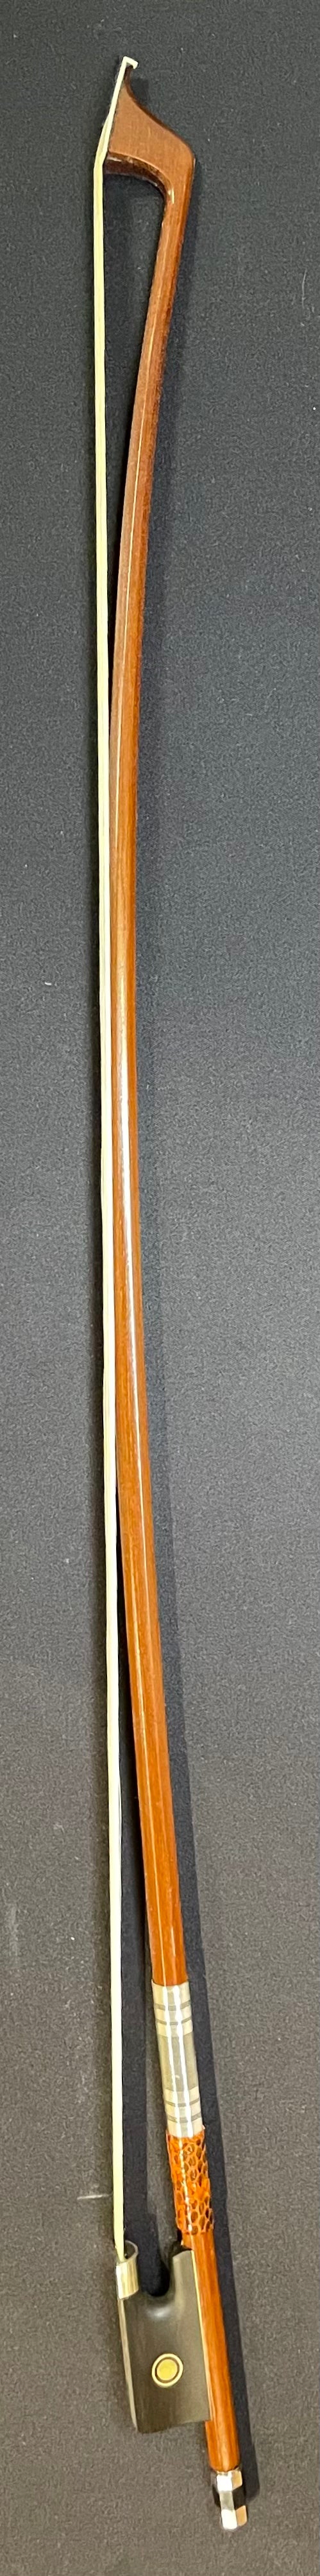 4/4 Cello Bow - MEB65 Wood Model